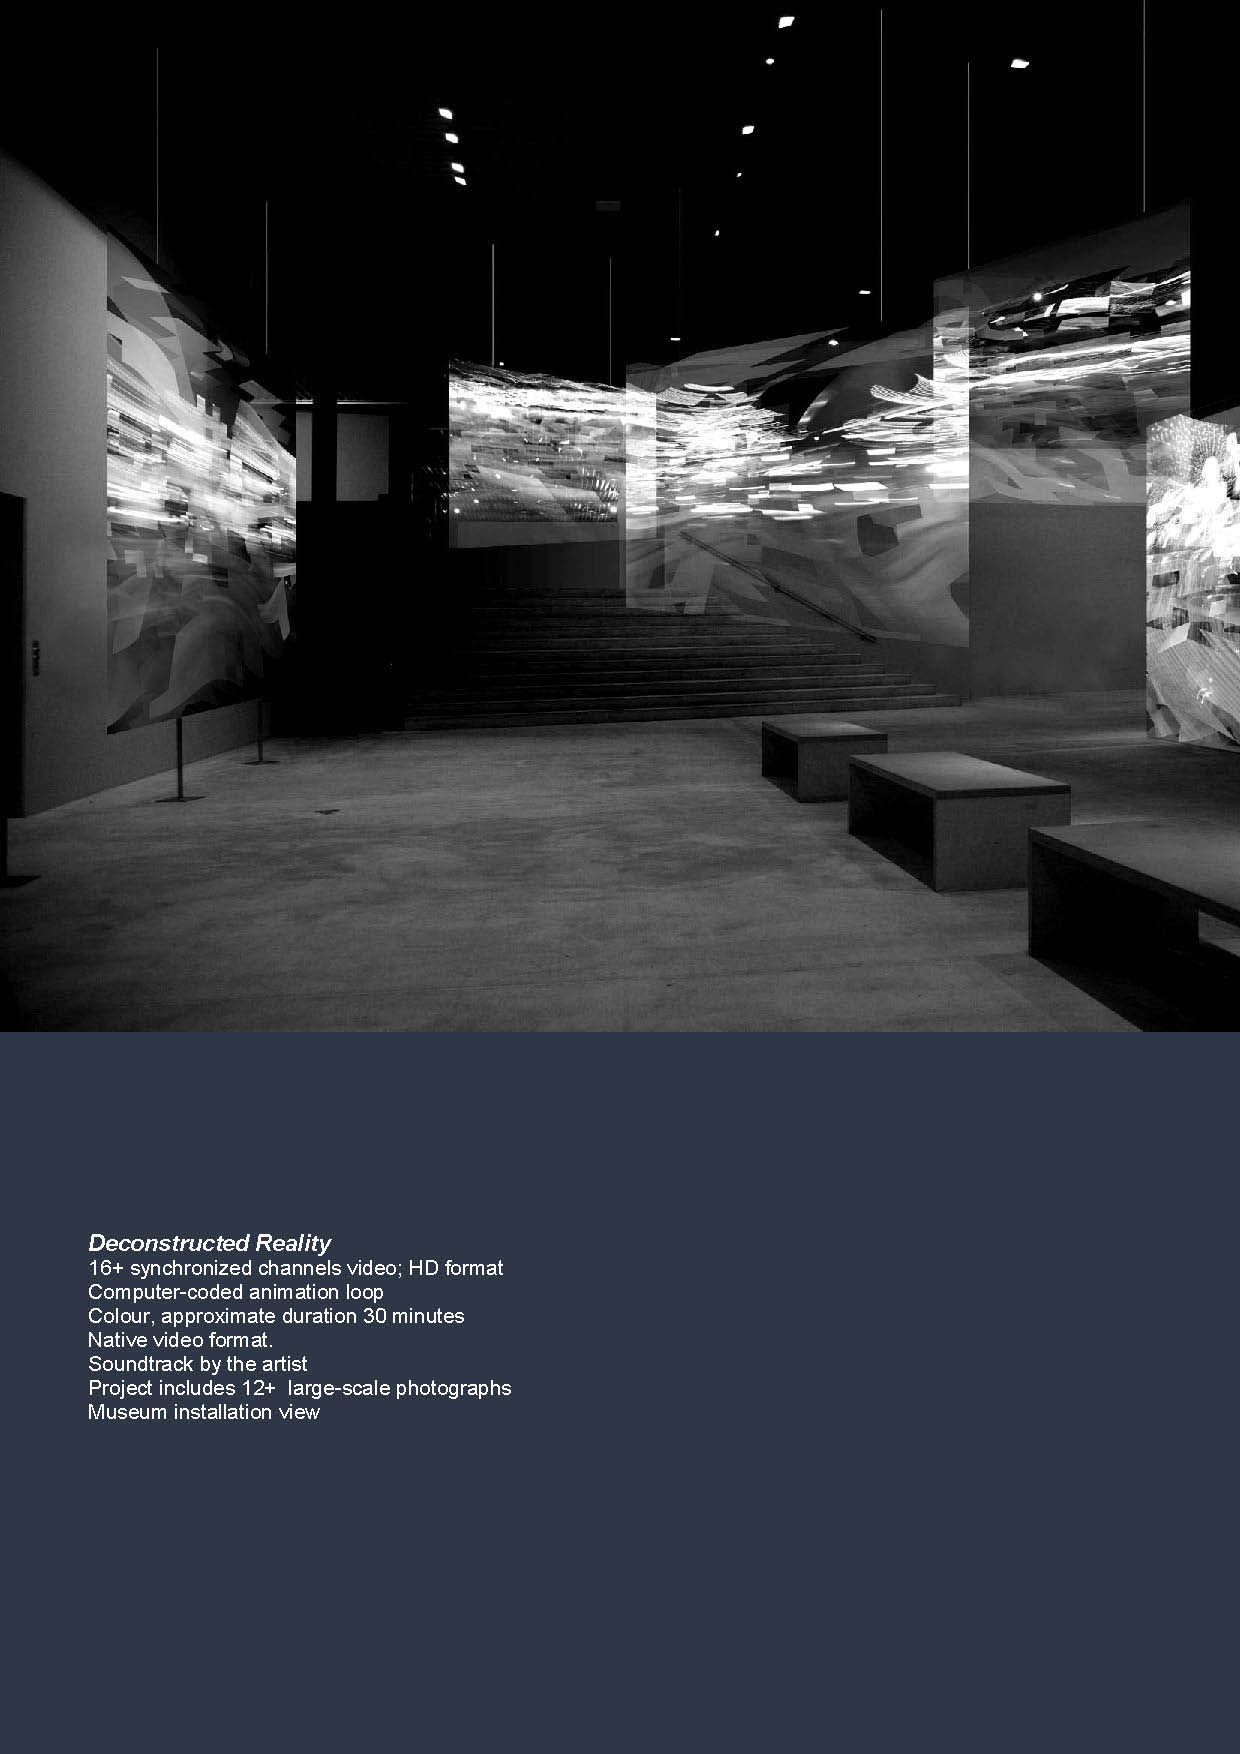 Tim White-Sobieski contemporary art installations museum exhibition views